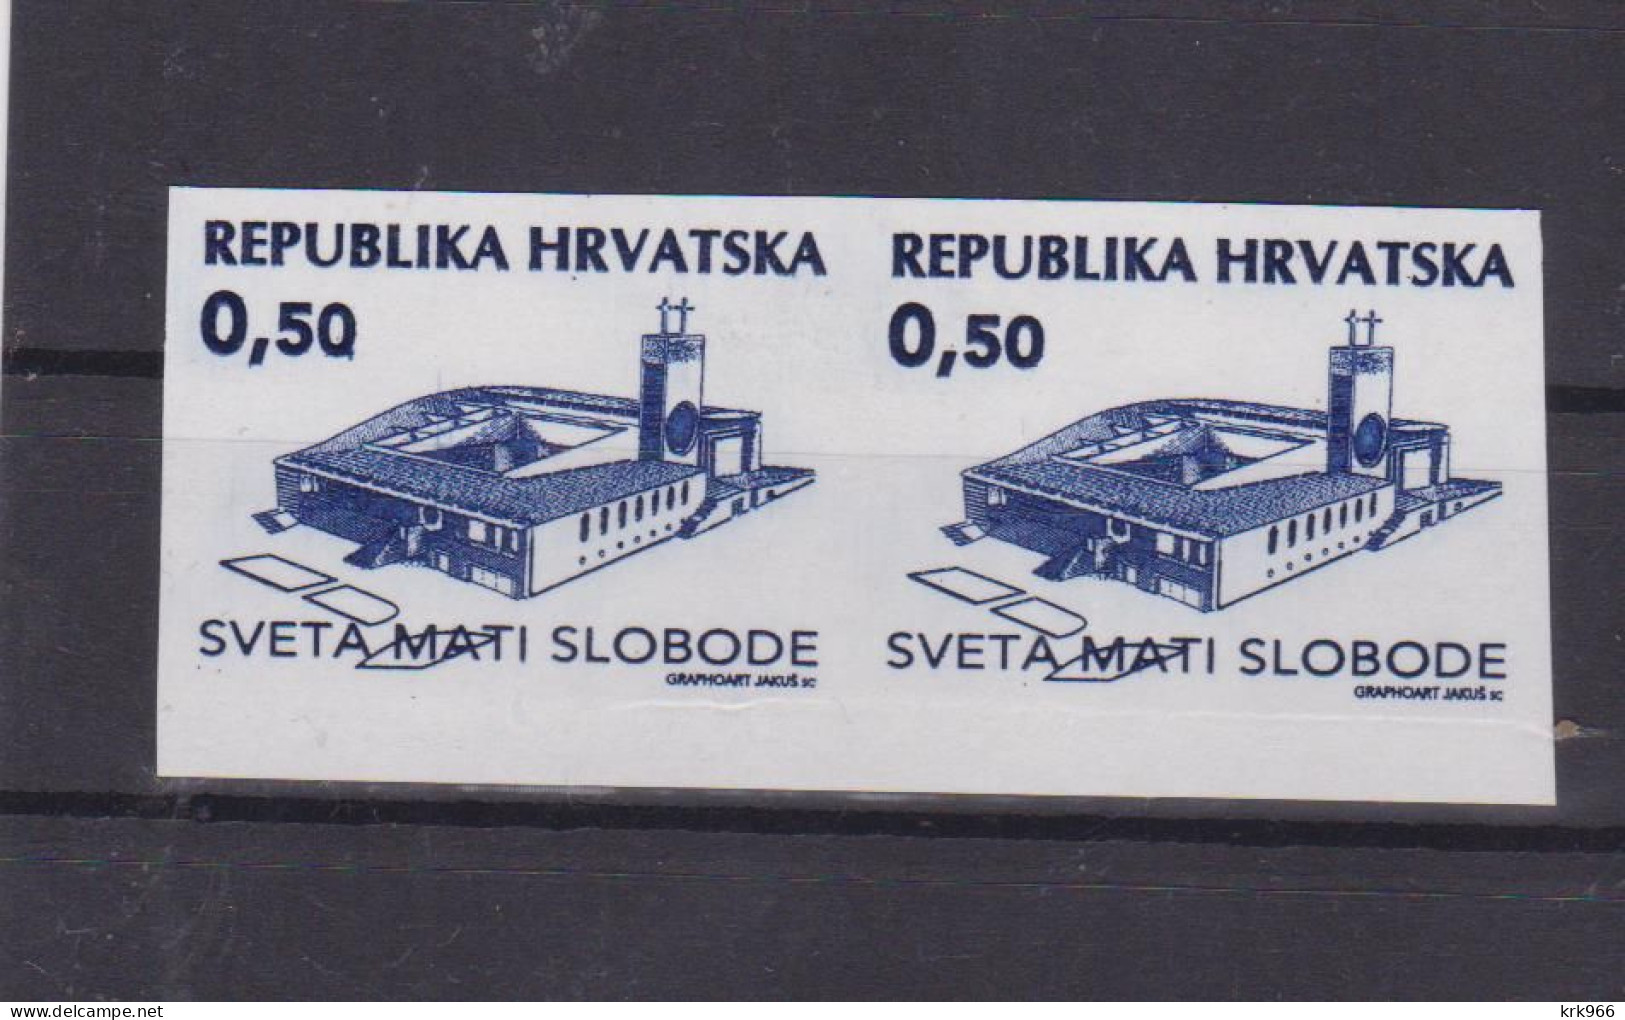 CROATIA.1995 SVETA MATI SLOBODE Charity Stamp,not Issued 0.50 Kn Value Pair  Proof On Paper - Croatia